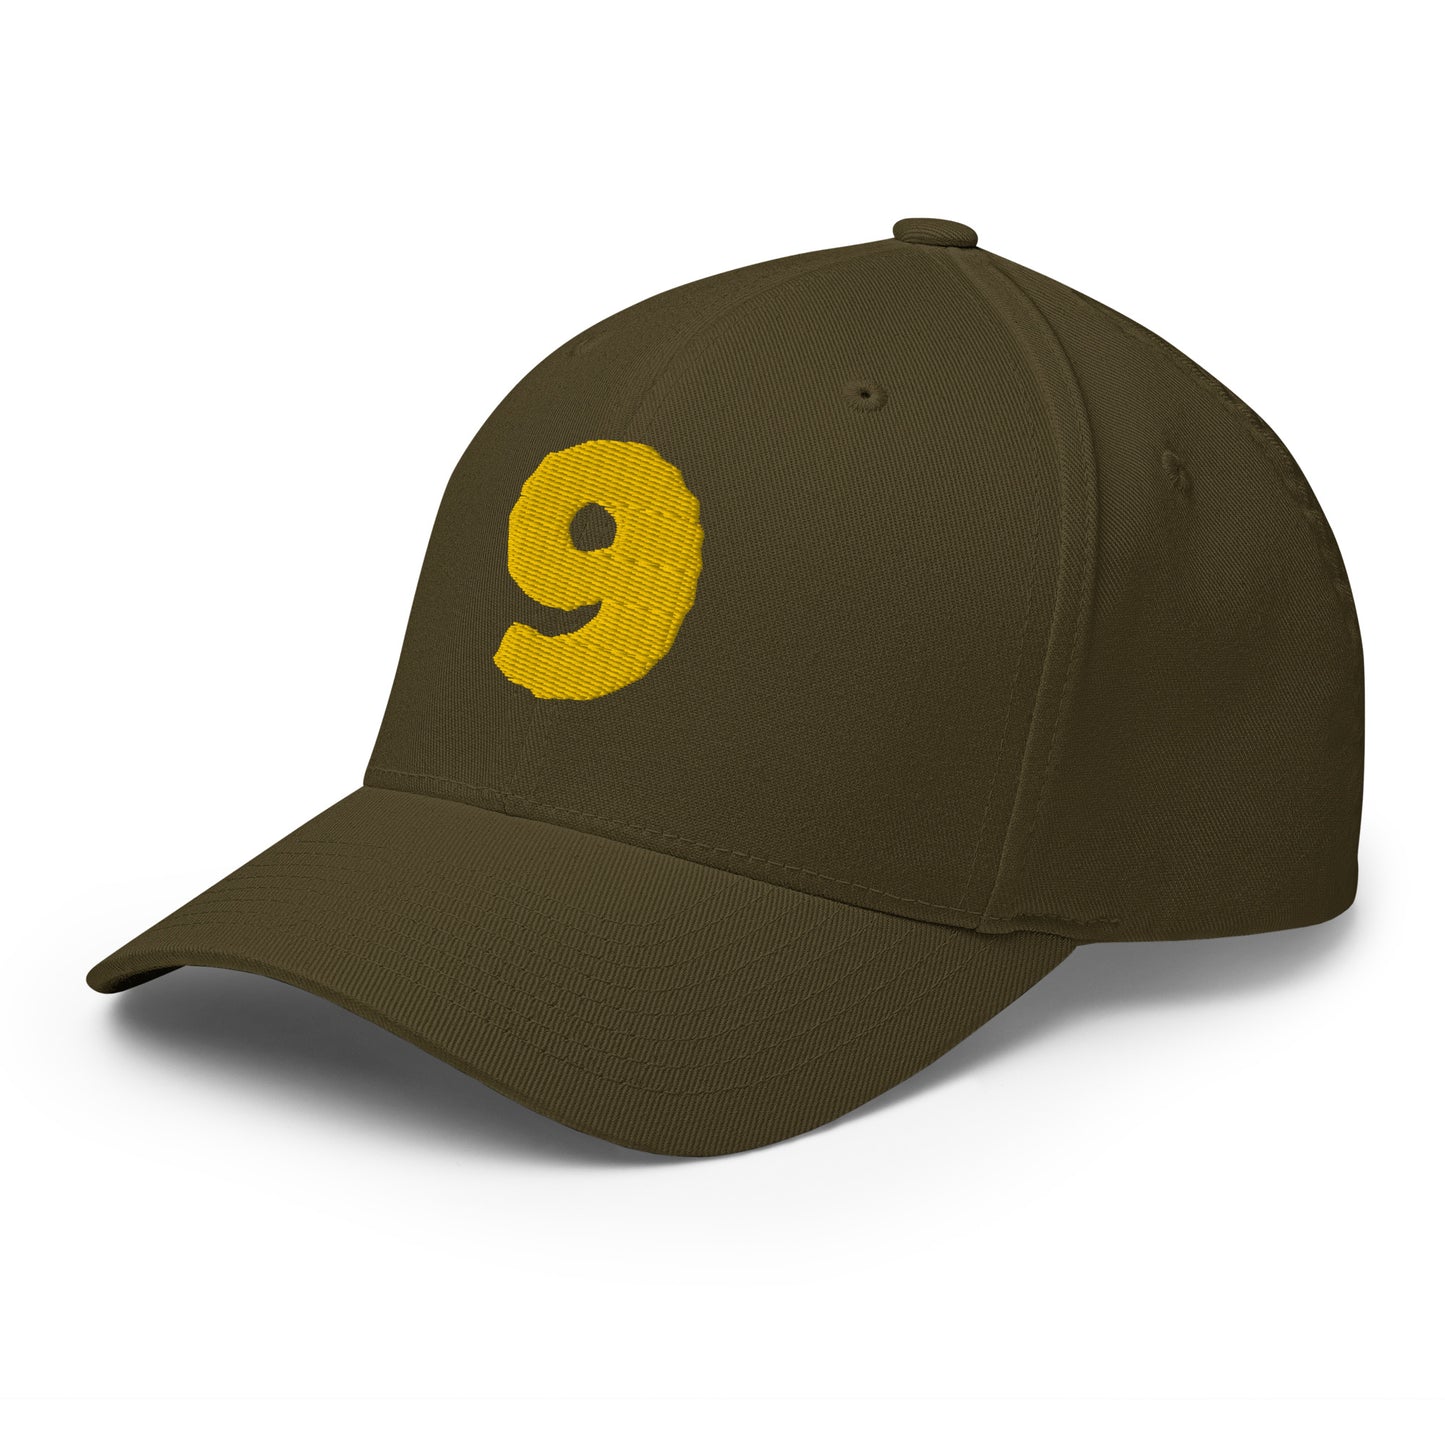 Baseball Cap with Number 9 Nine Symbol